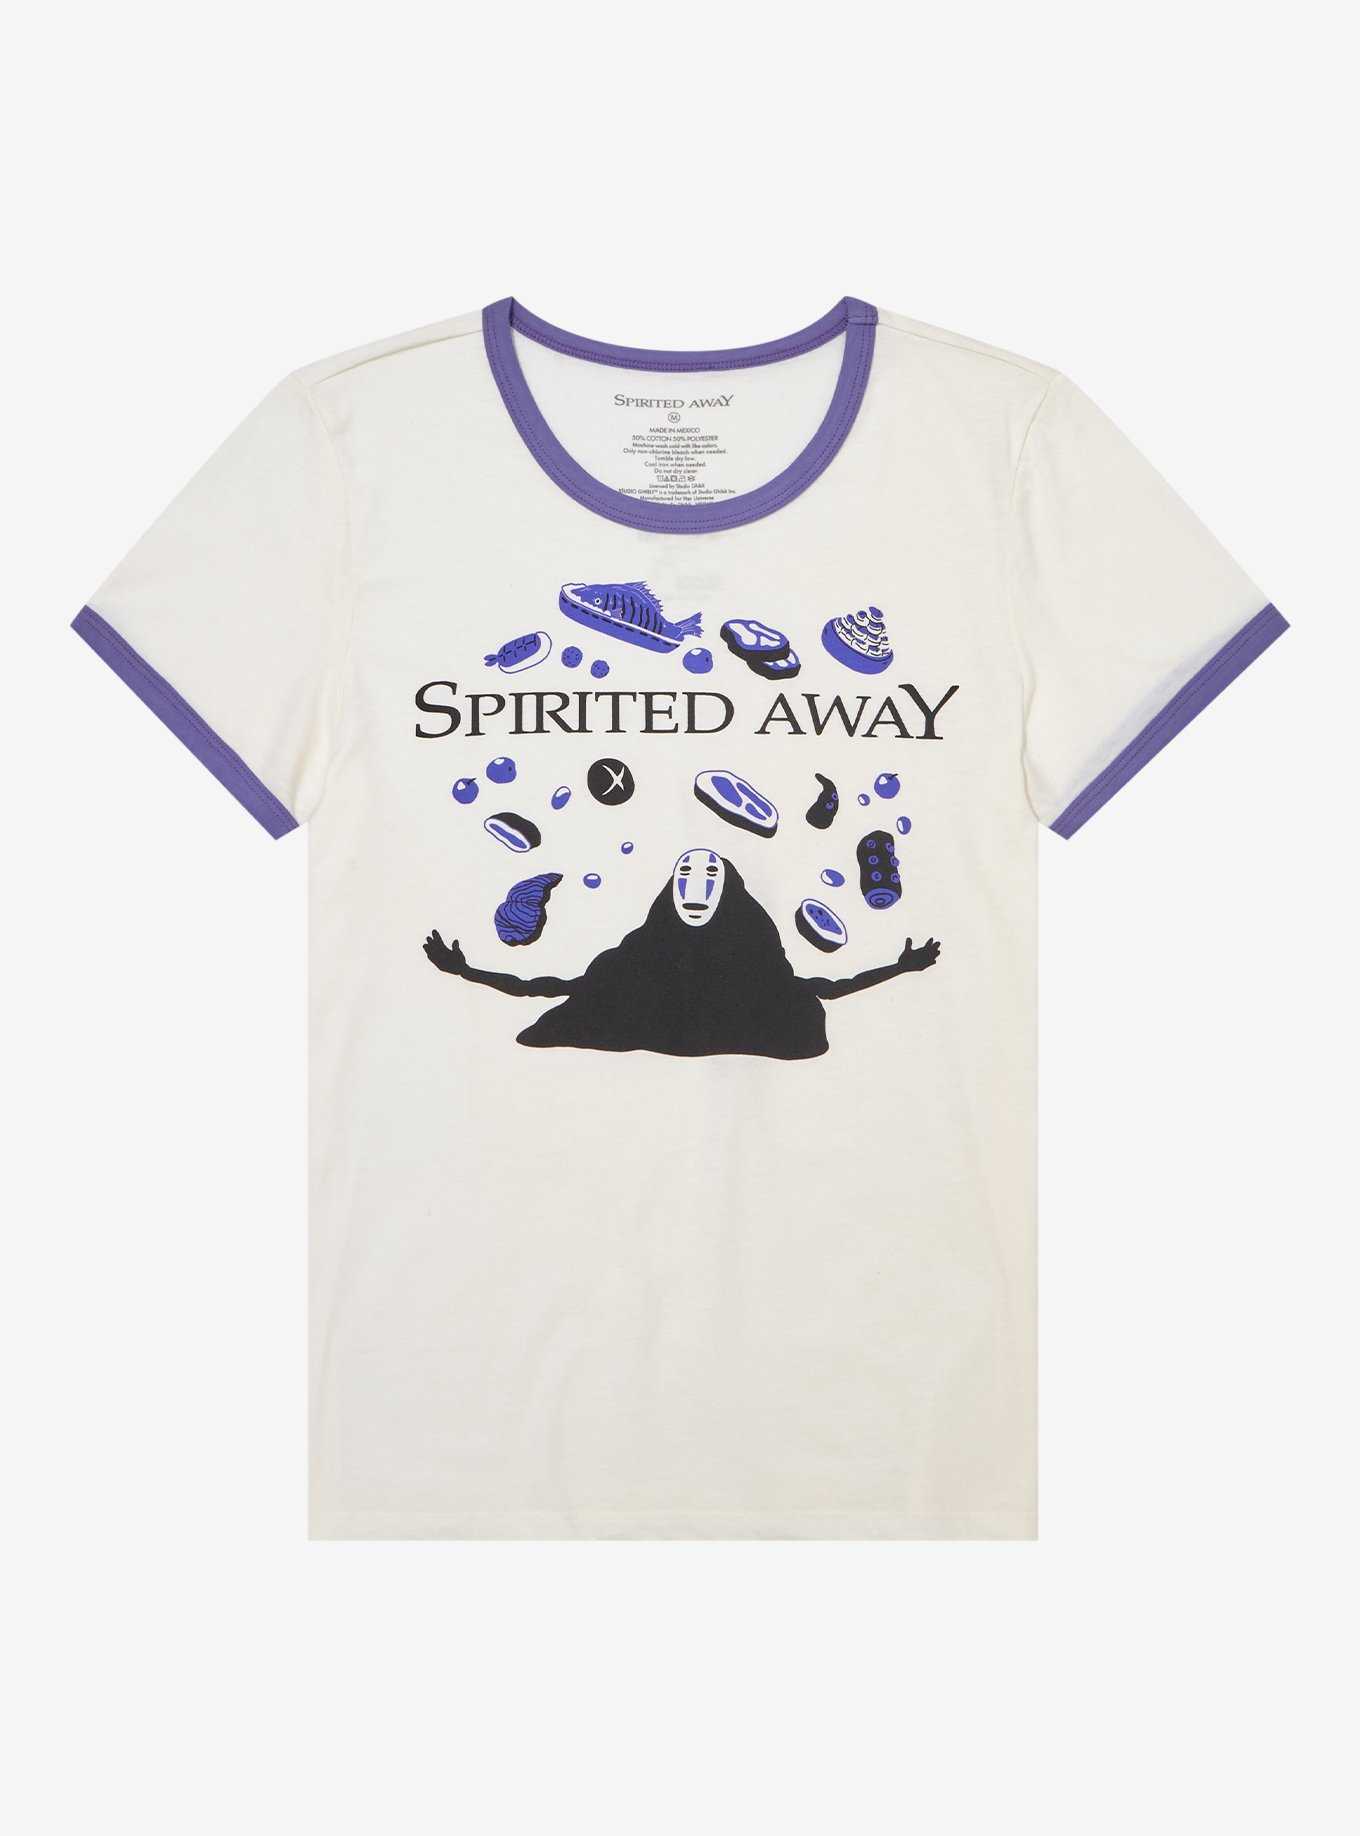 Studio Ghibli Spirited Away No-Face Girls Ringer T-Shirt, , hi-res